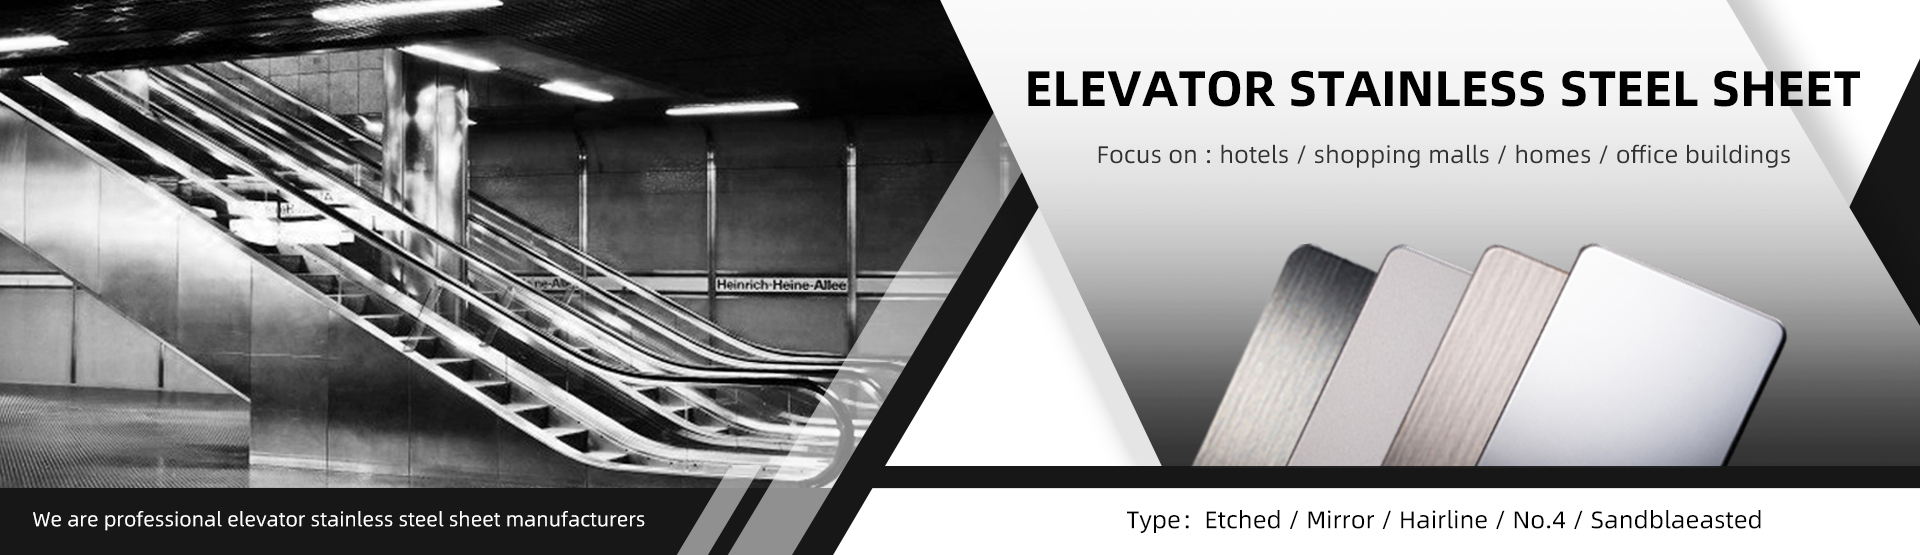 Hoja_banner de acero inoxidable para ascensores